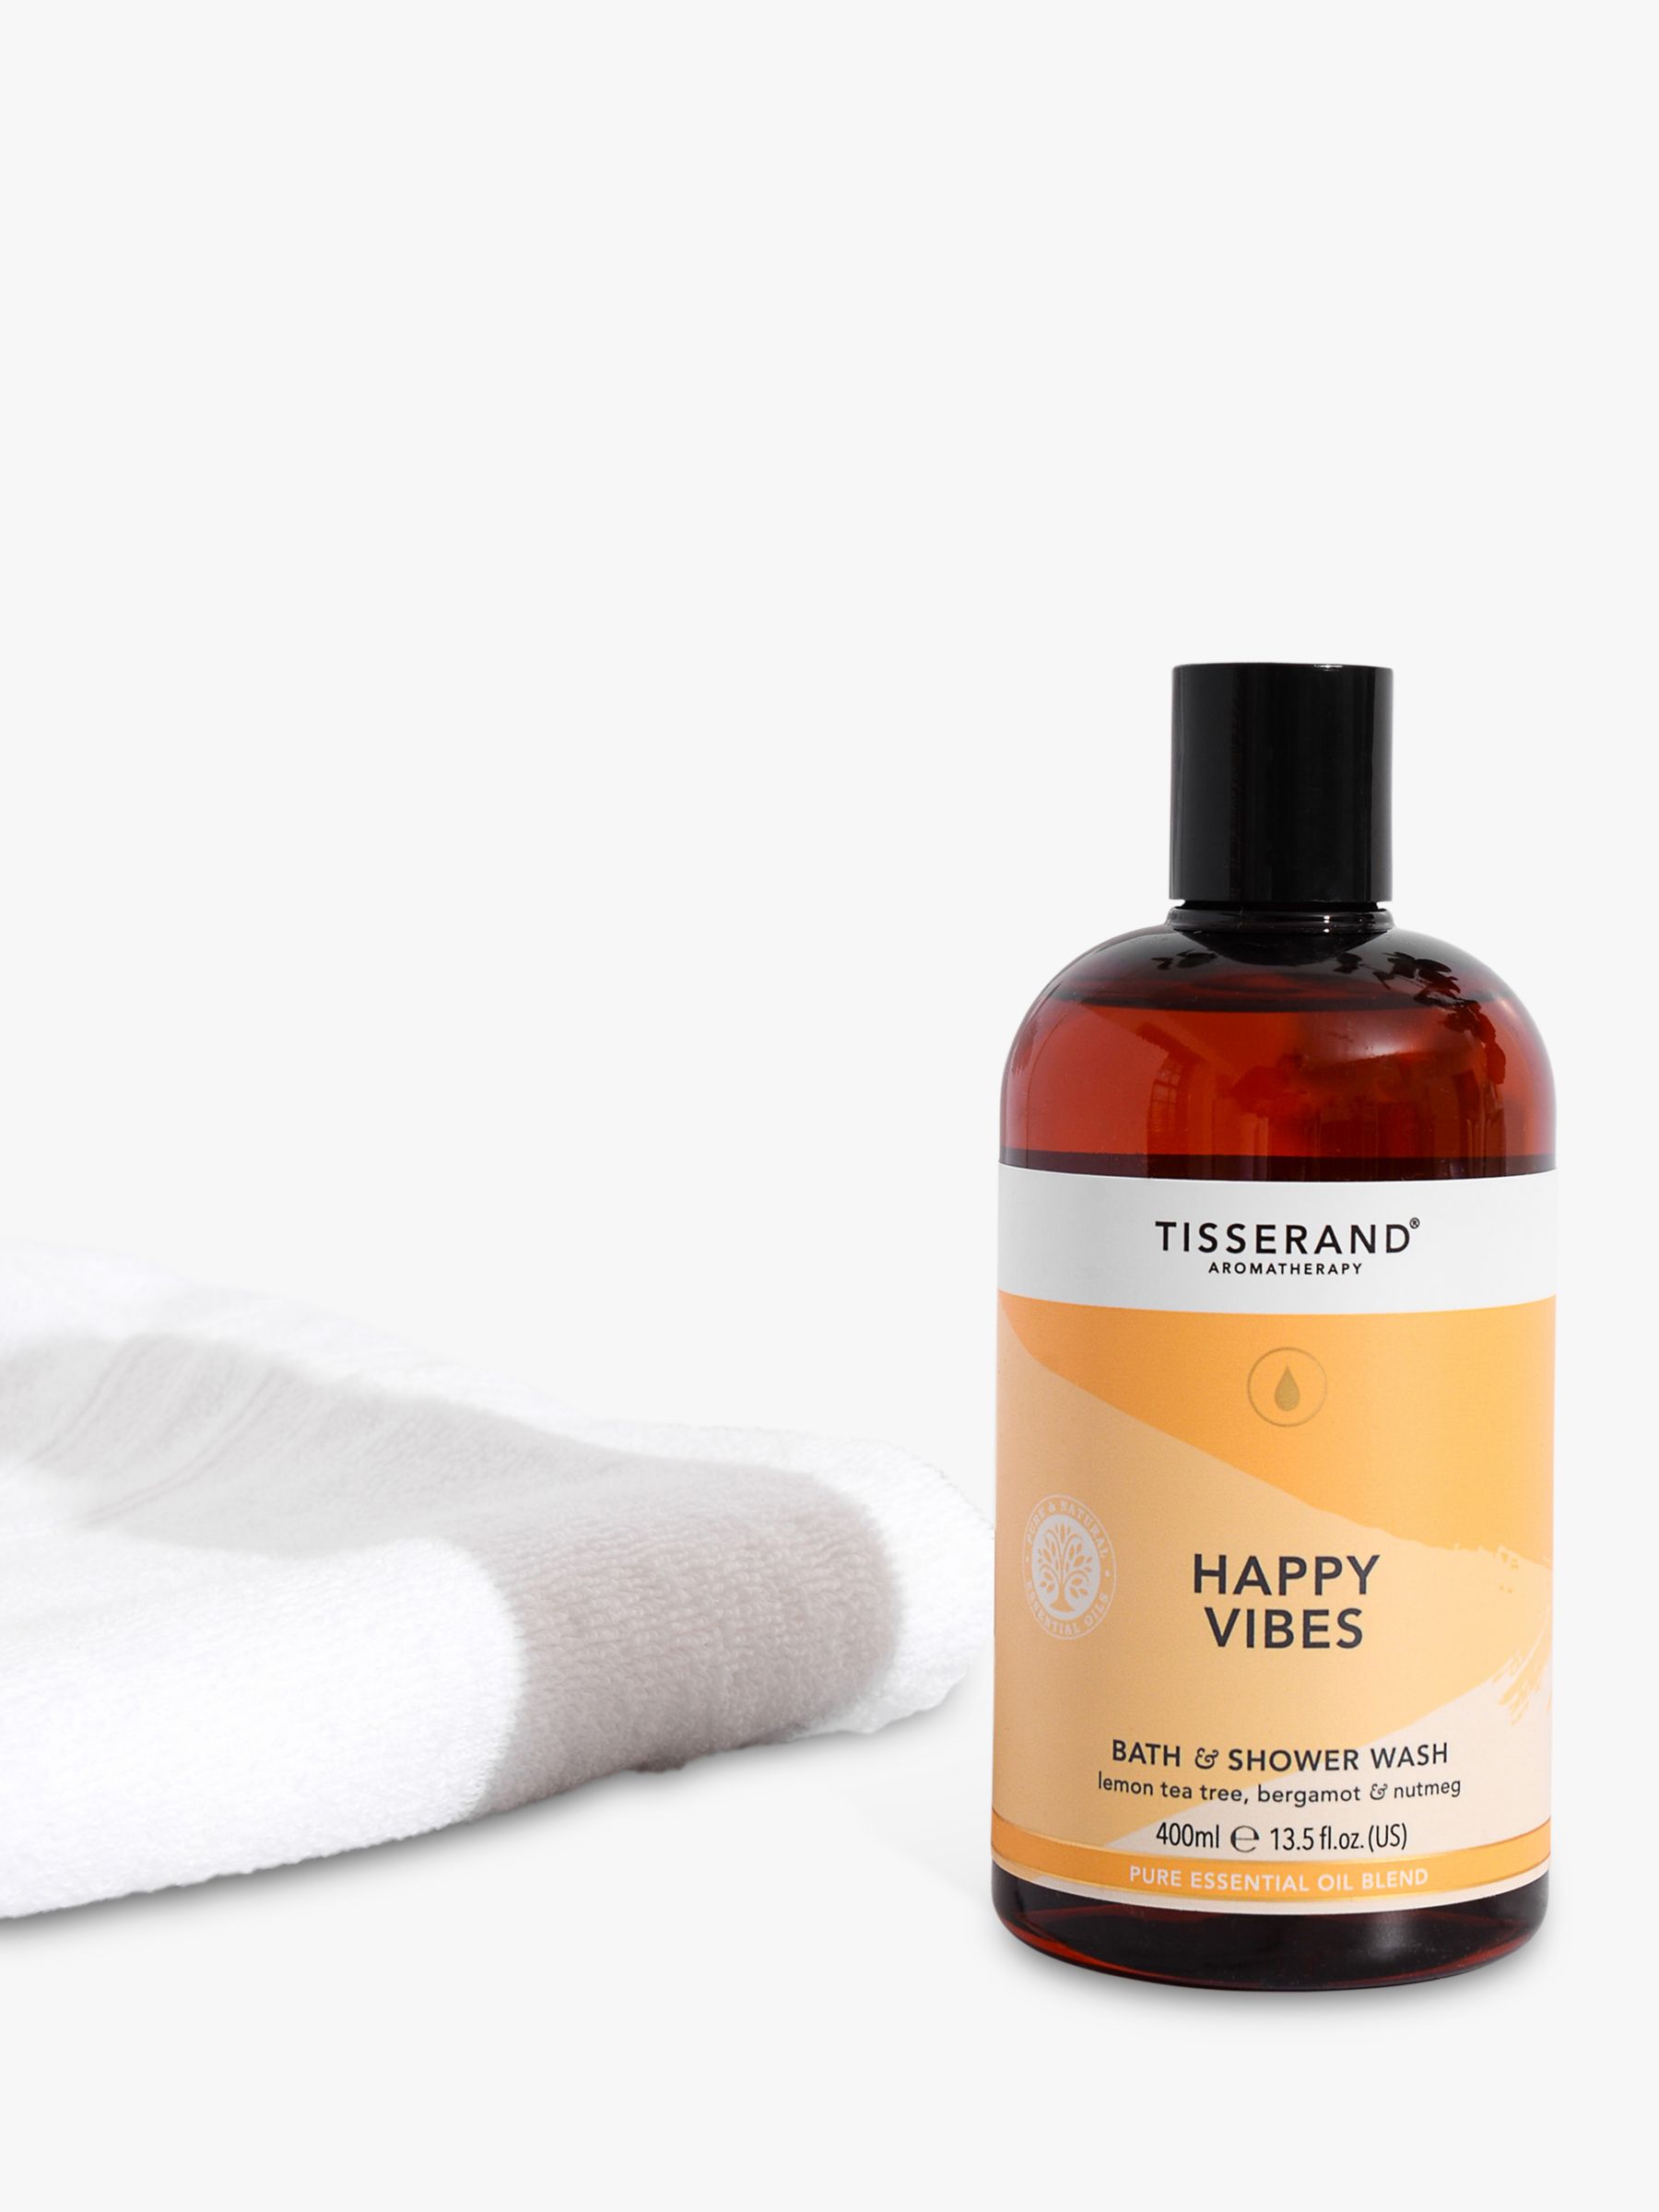 Tisserand Aromatherapy Happy Vibes Bath & Shower Wash, 400ml 1